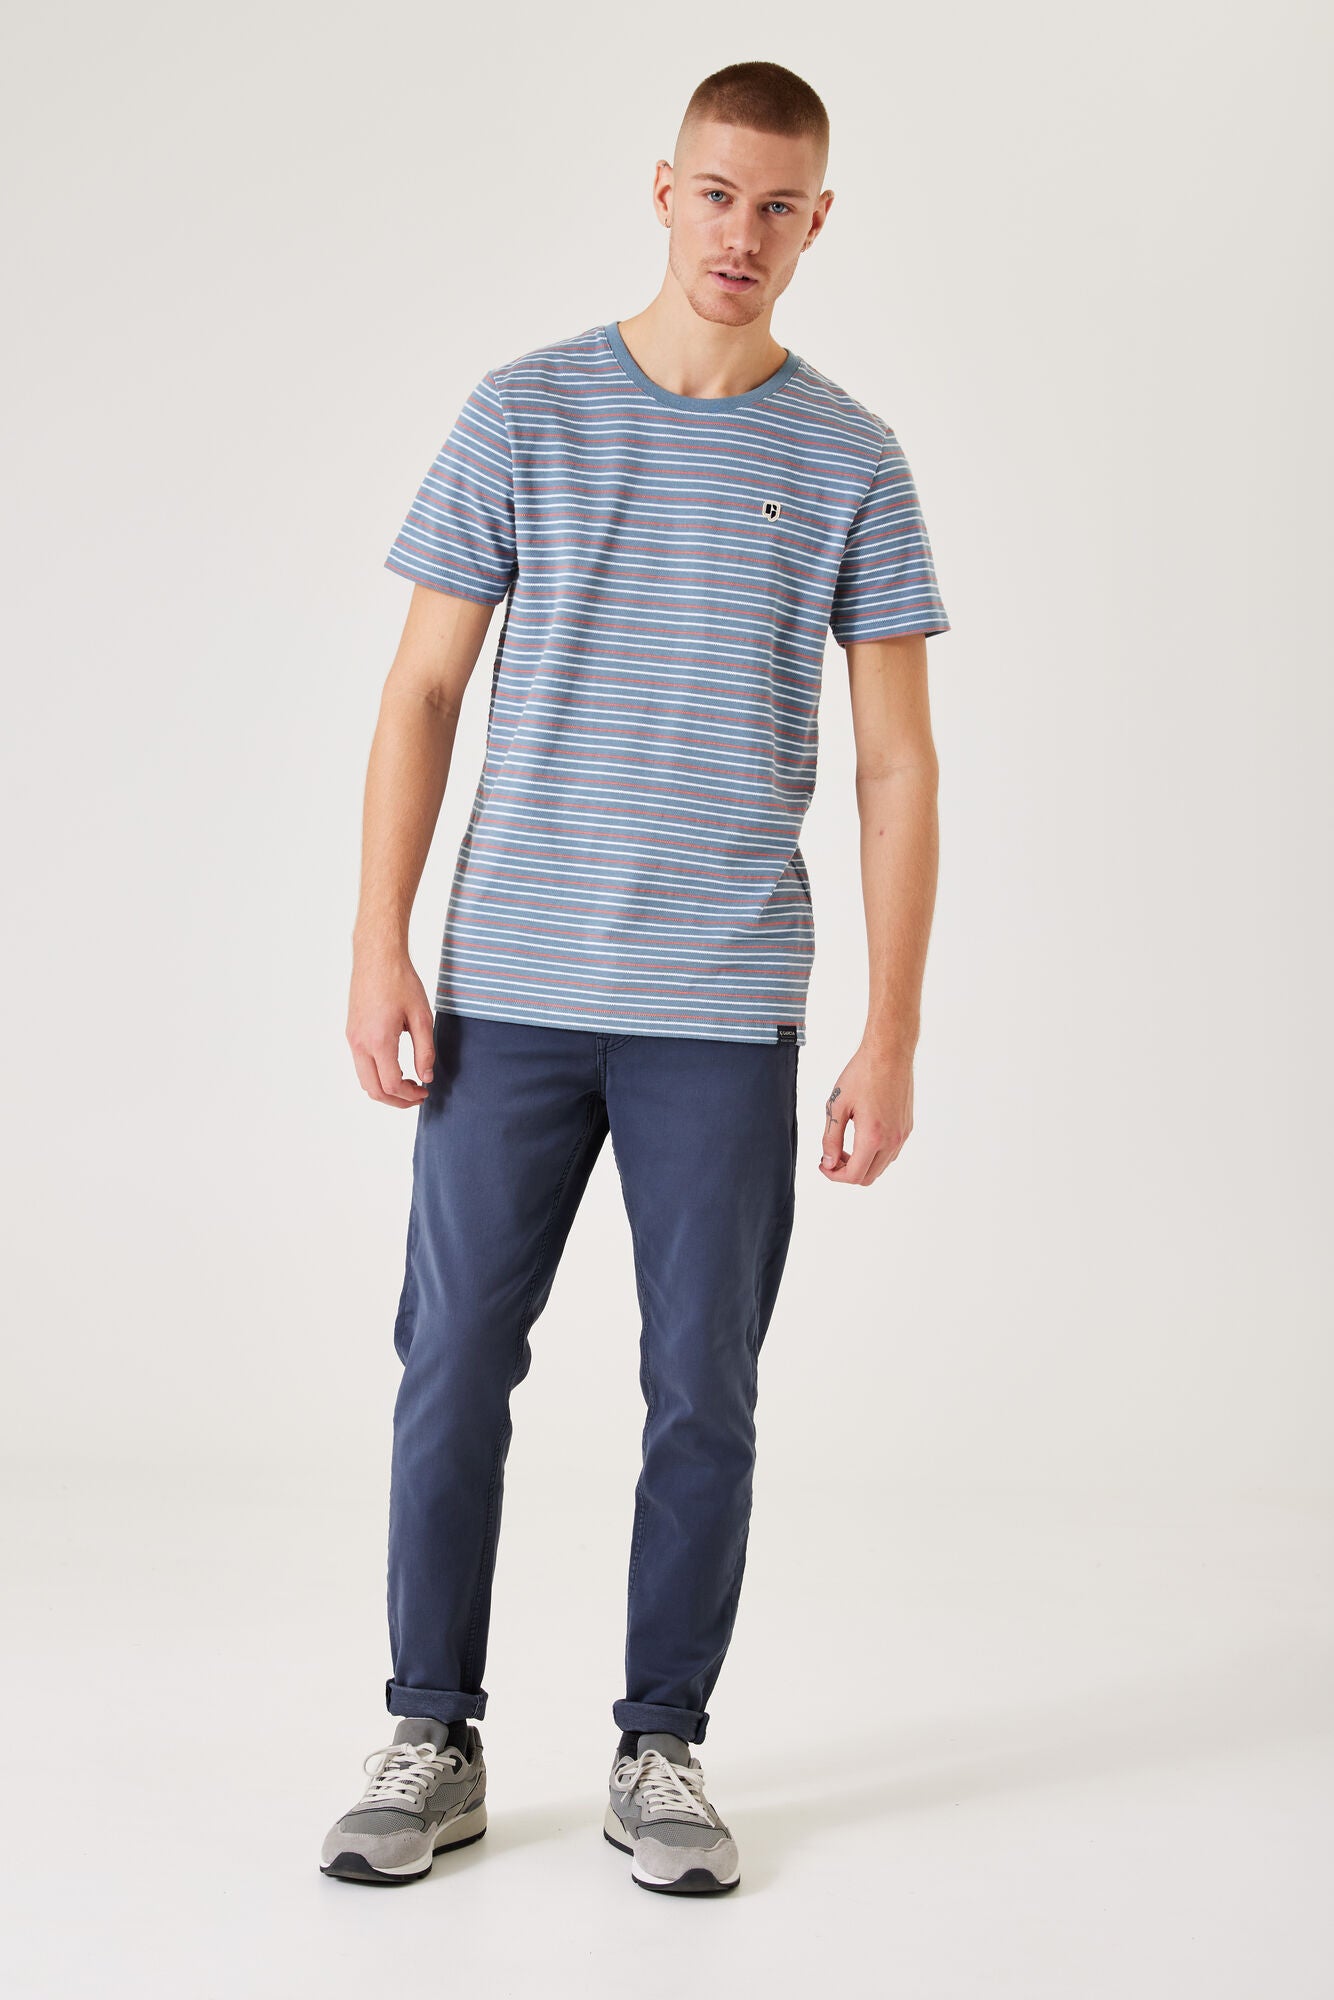 GARCIA - Short Sleeved Horizontal Striped Shirt I Stone Blue